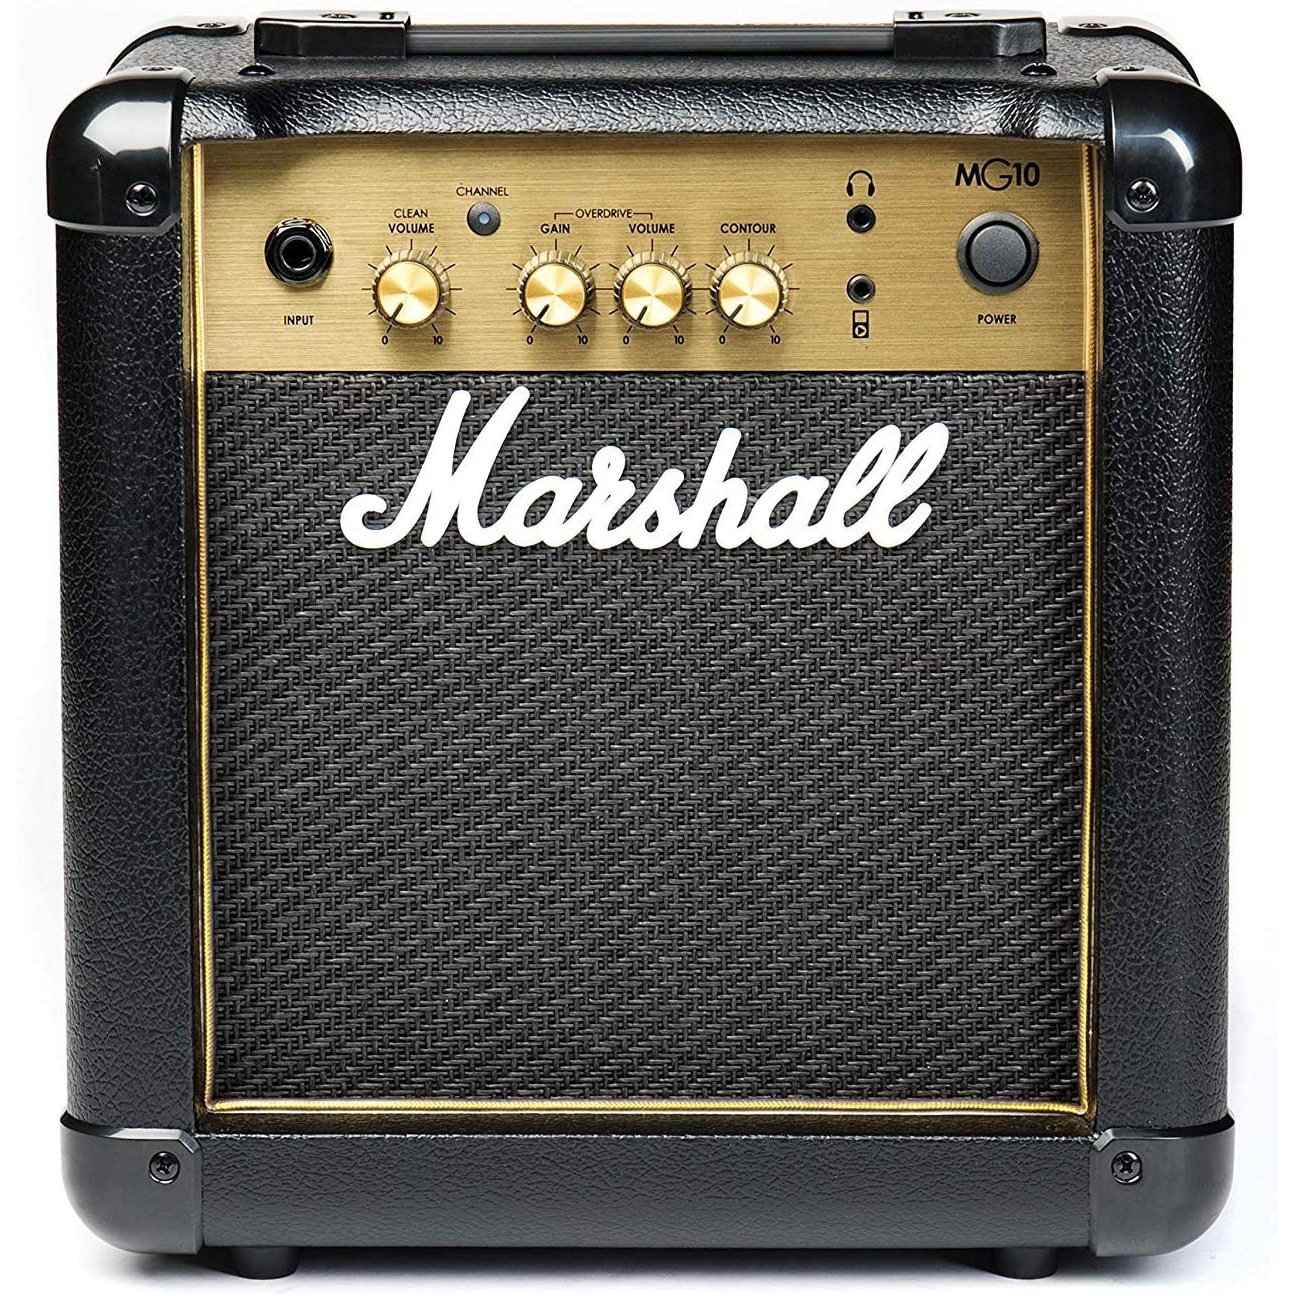 Marshall MG10G, Ampli guitare électrique 10W